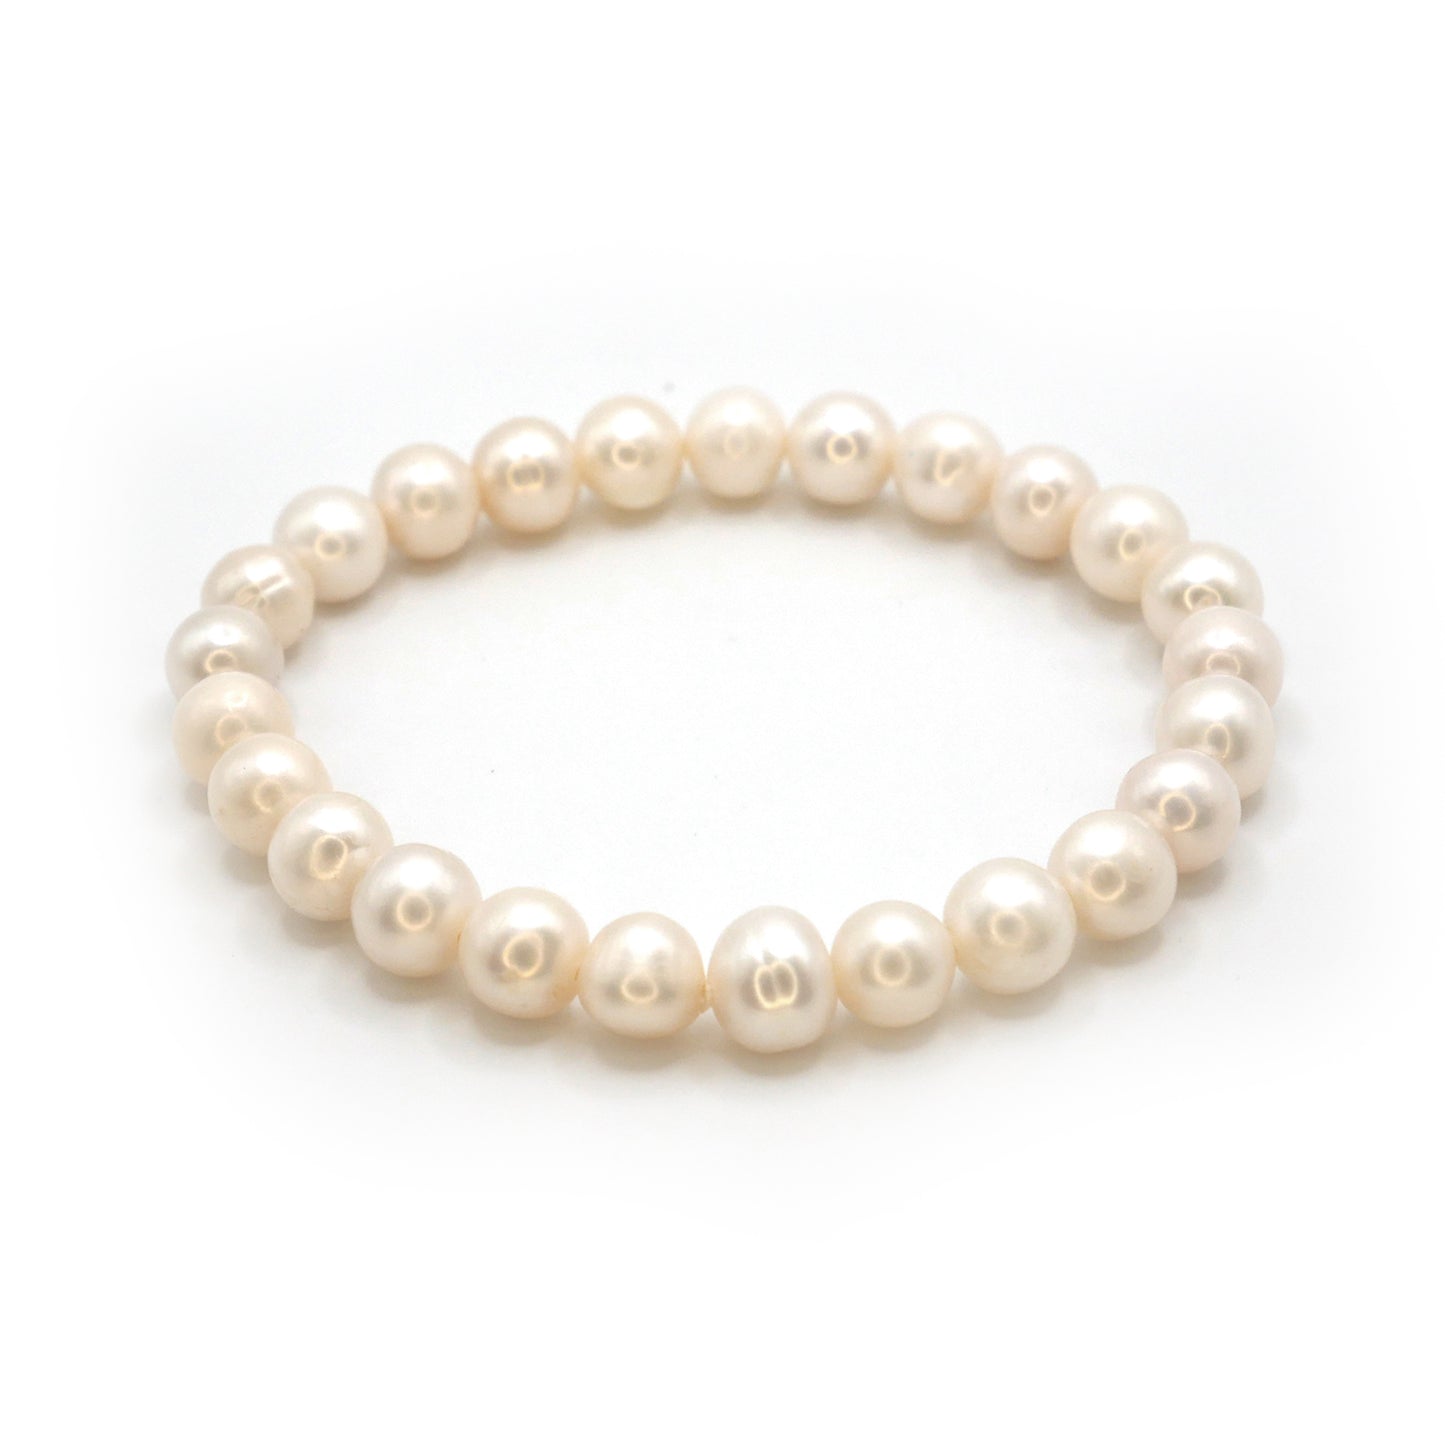 The Pearl Bracelet